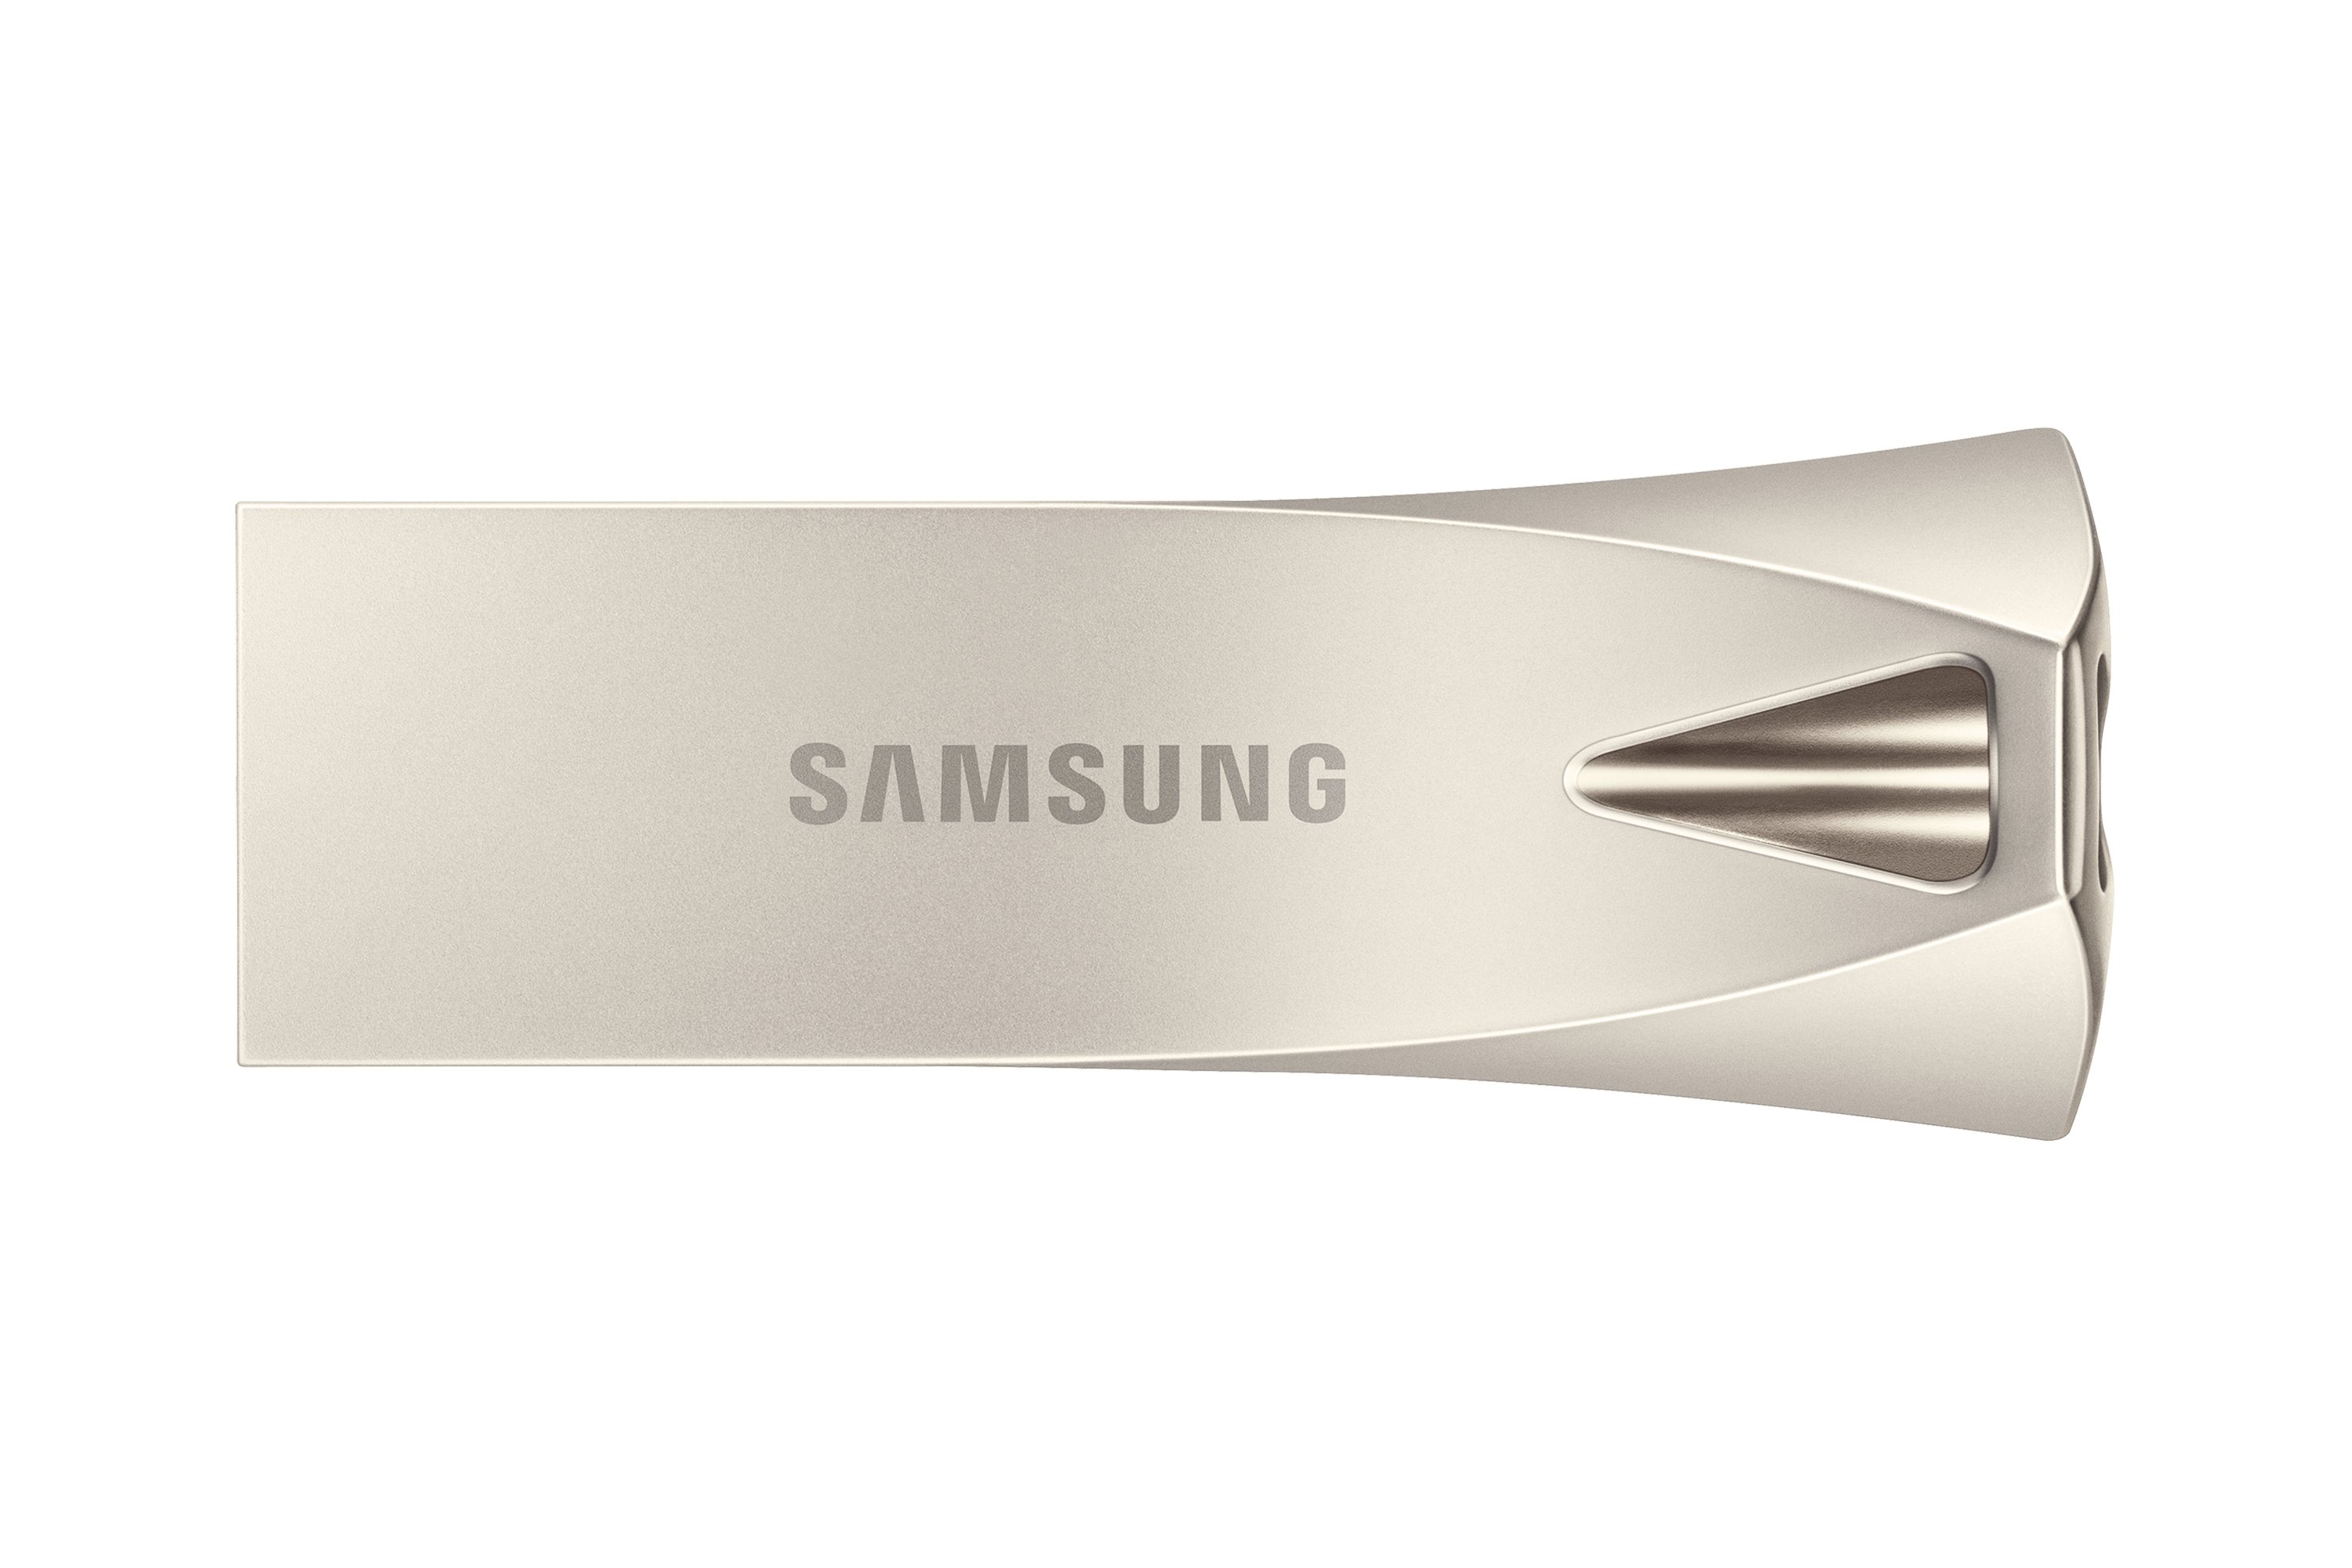 Samsung BAR Plus USB 3.1 Flash 128GB